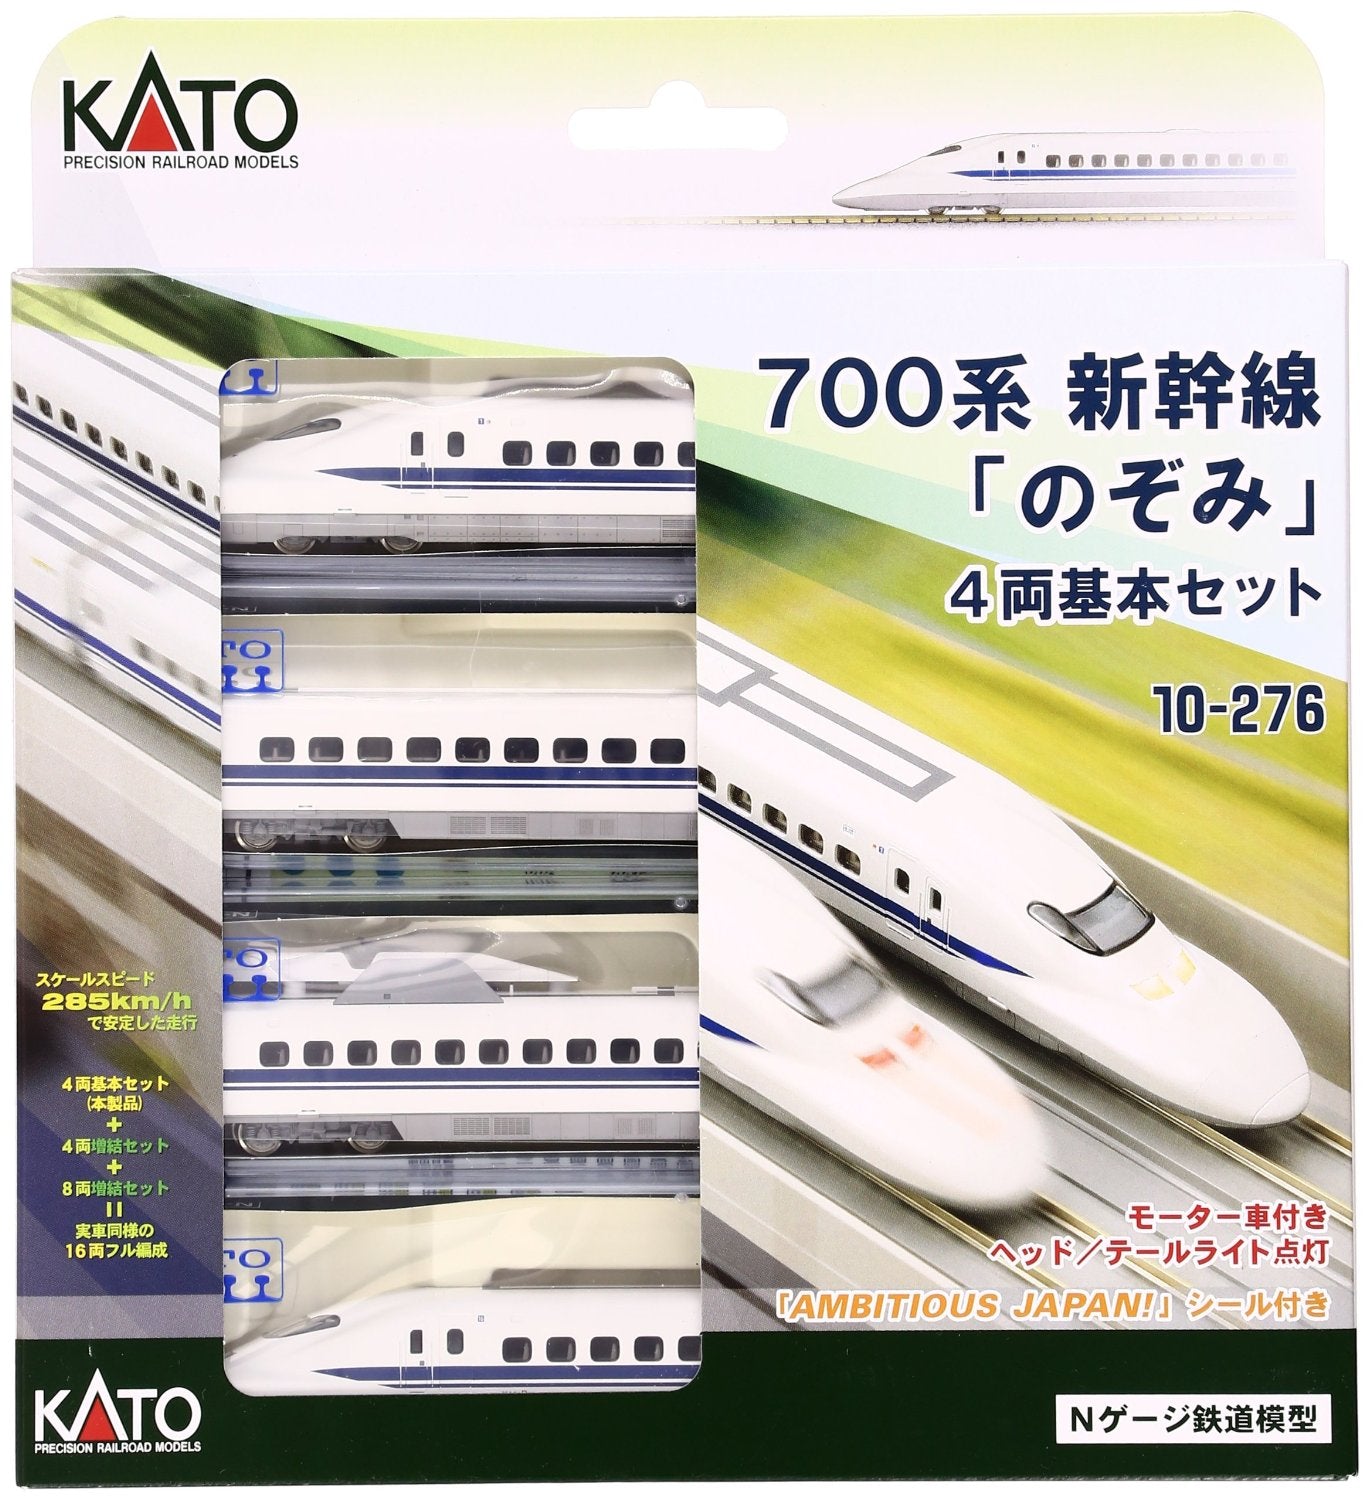 10-276 Series 700 Nozomi Shinkansen 4 Car Set